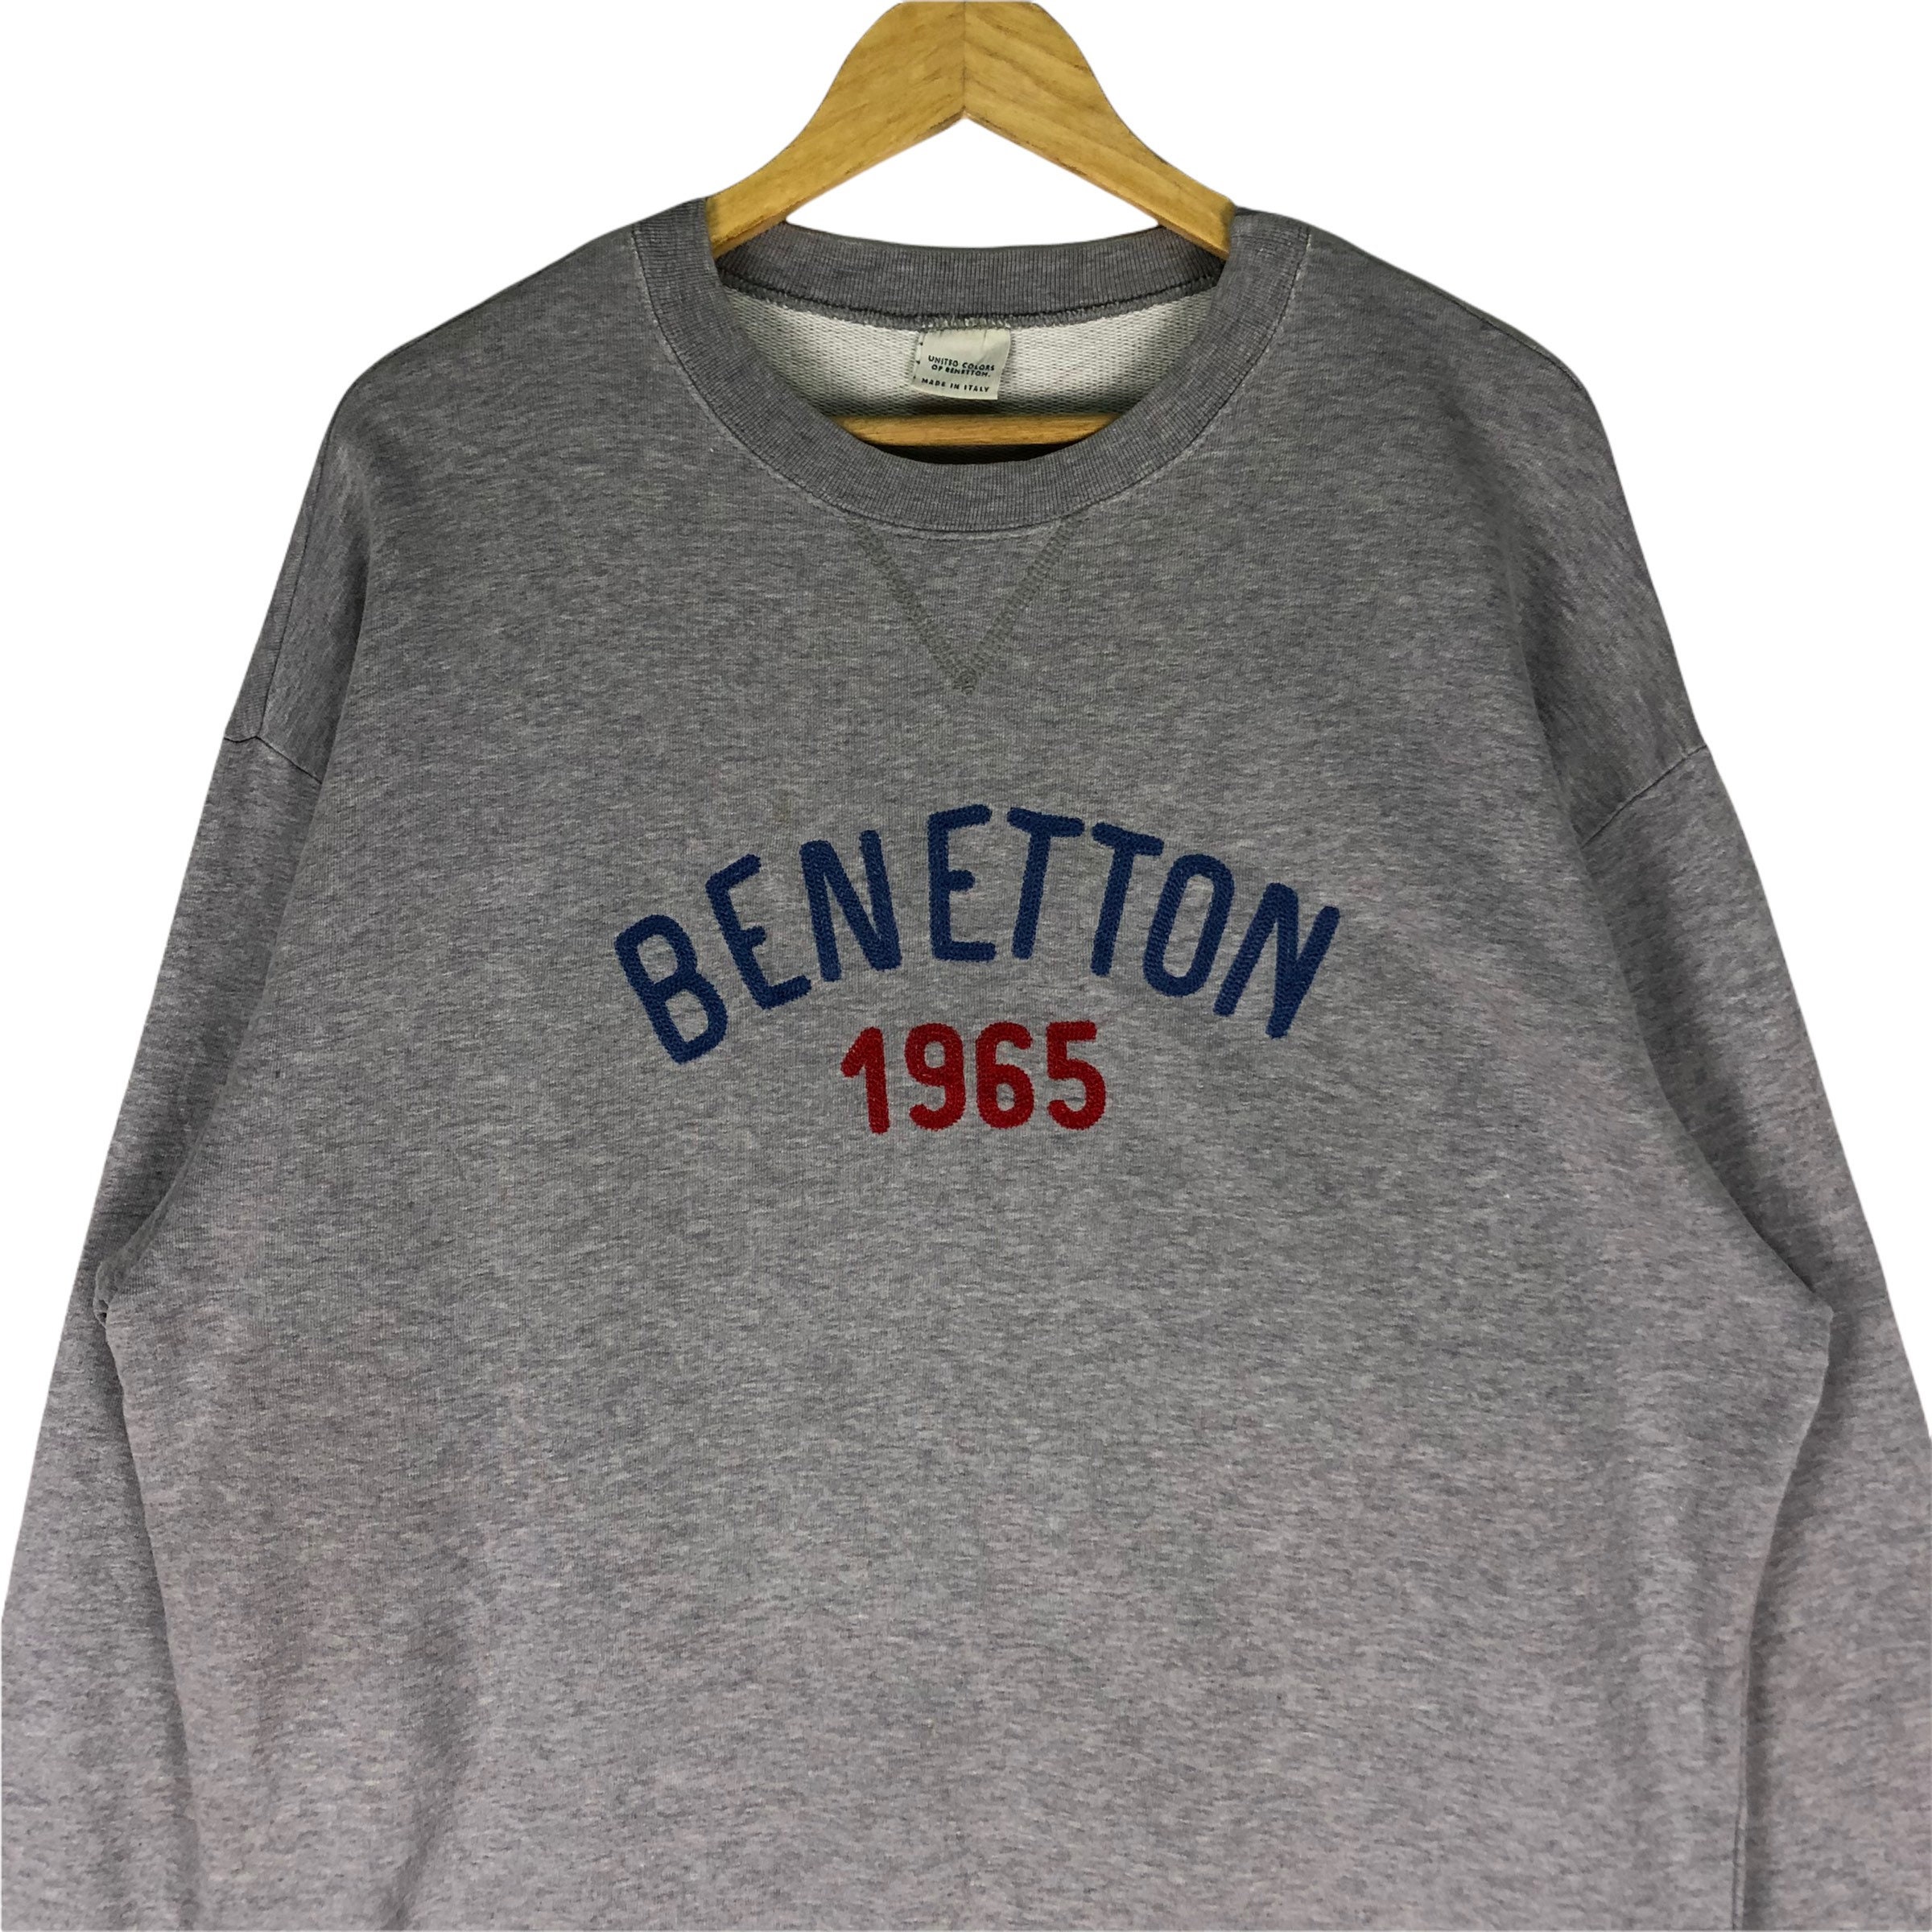 Vtg BENETTON Crewneck Sweatshirt Spell Out Jumper Pullover Streetwear Clothing